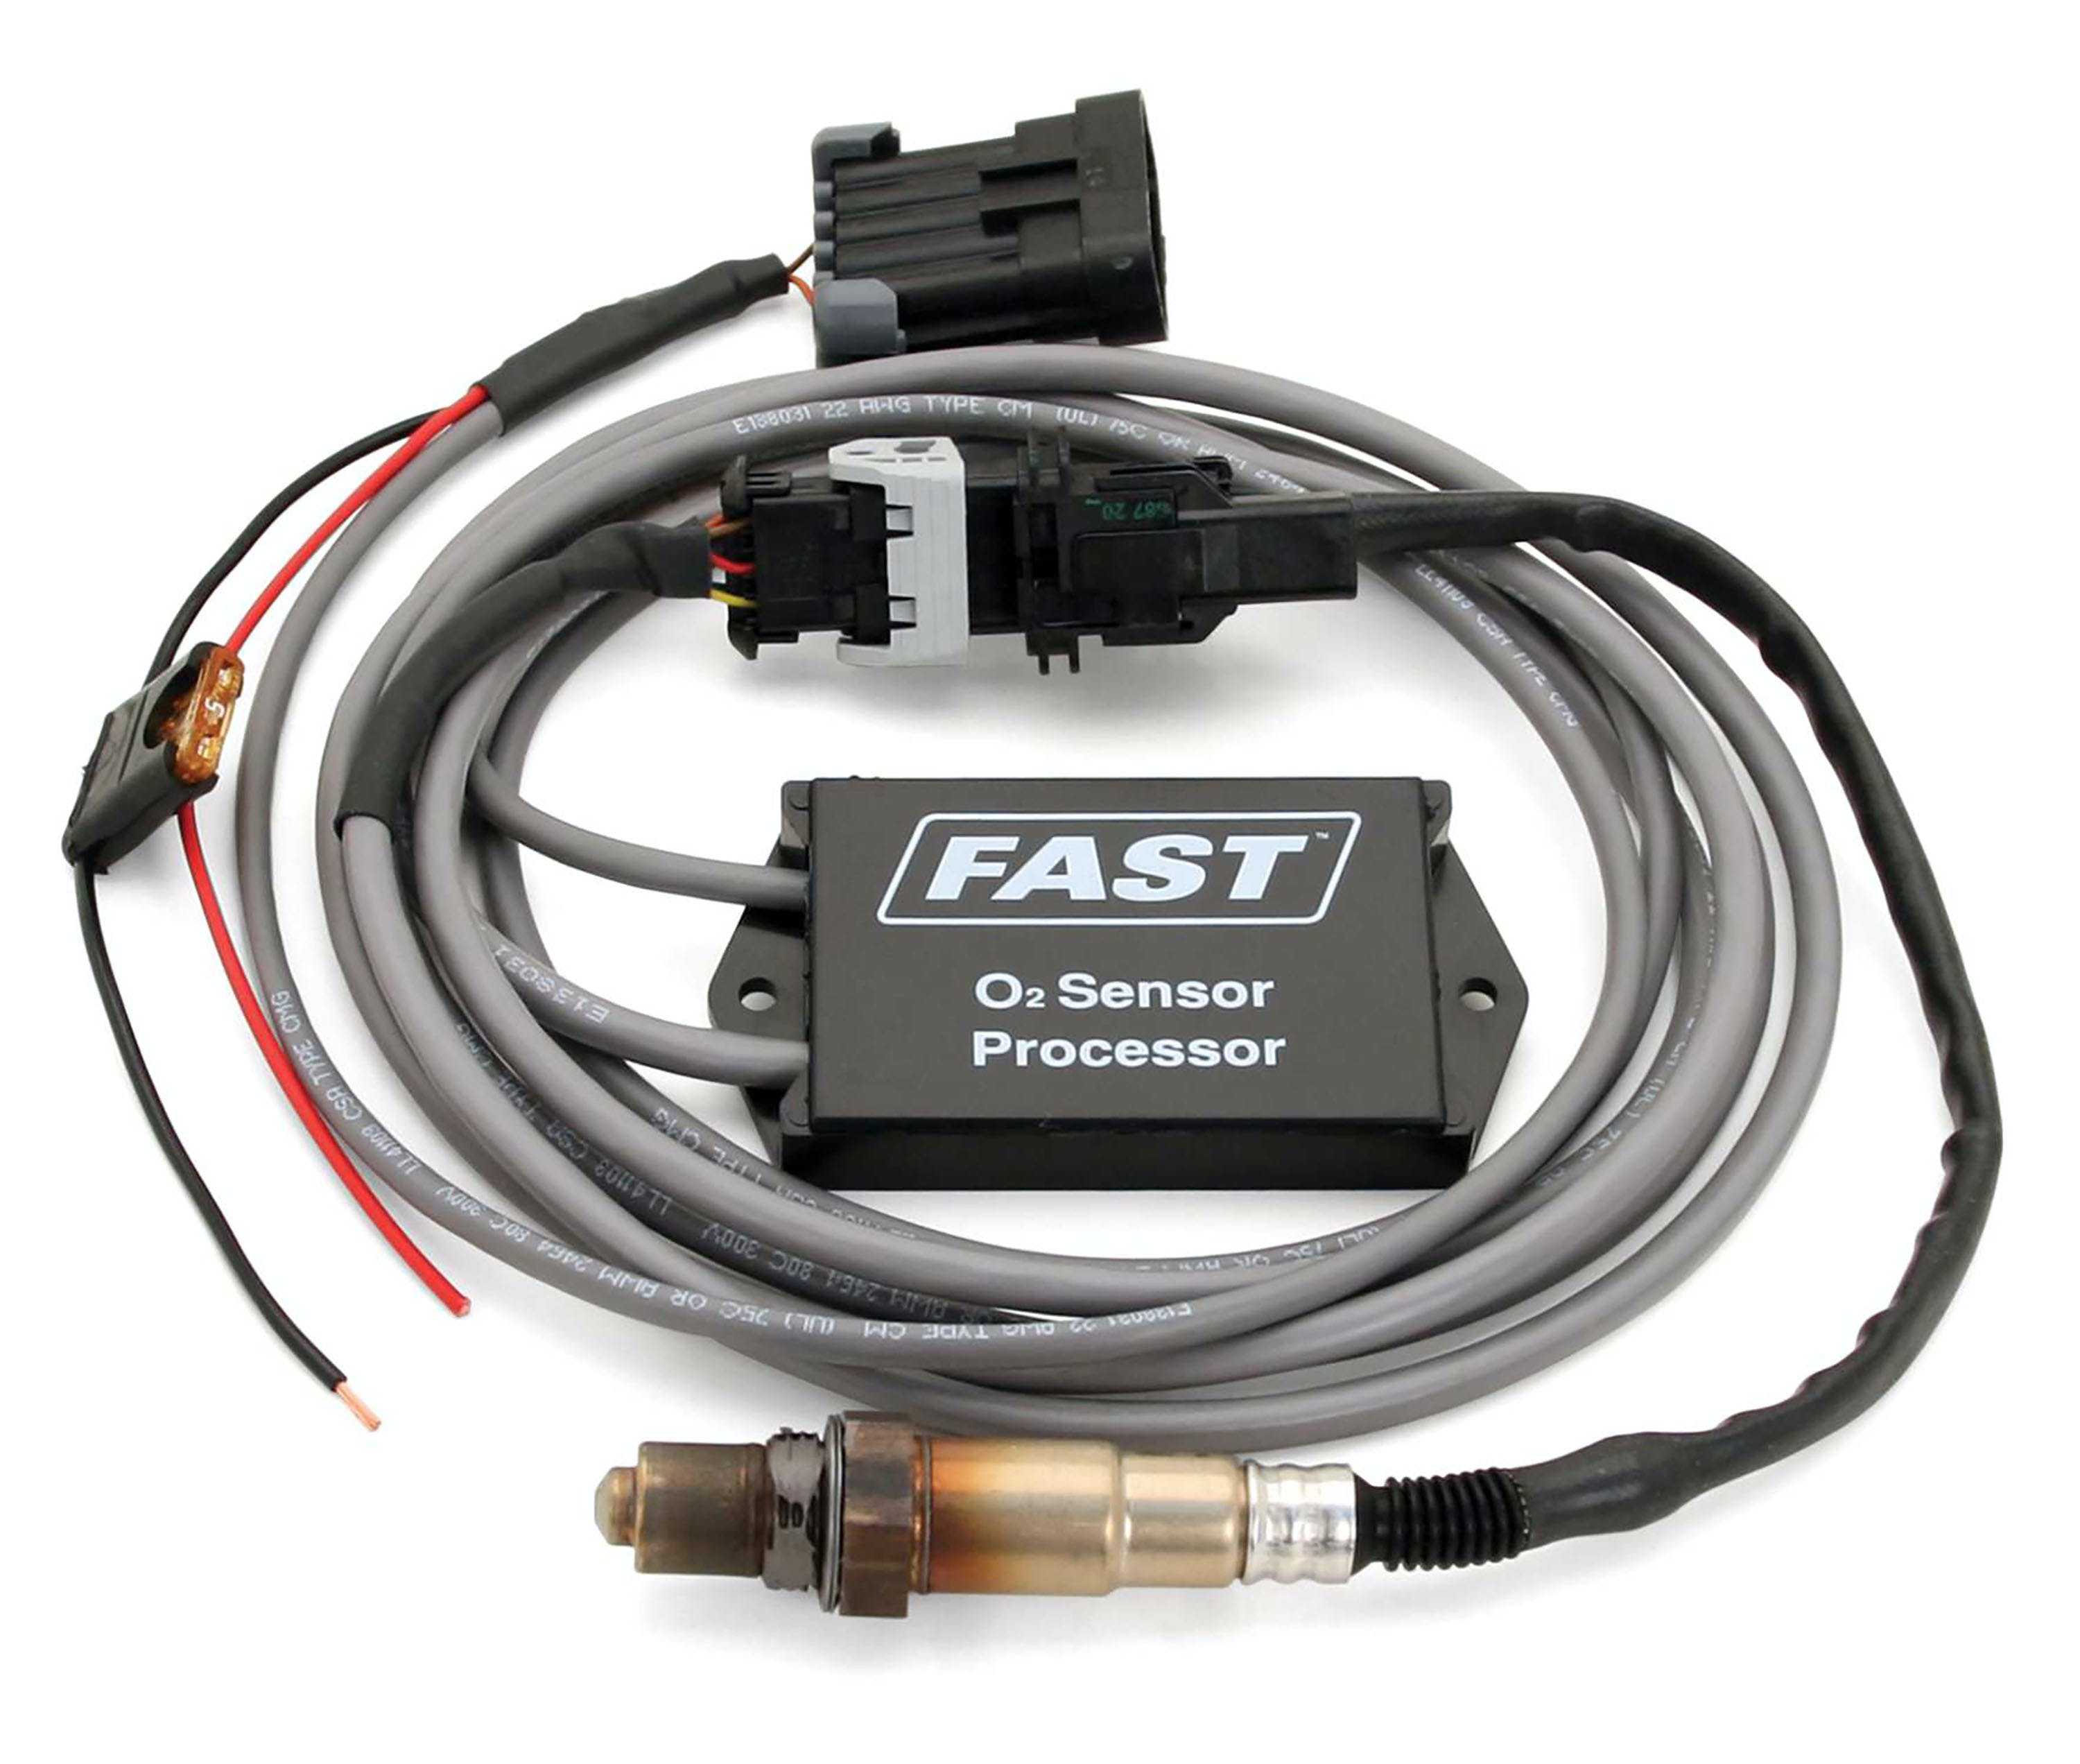 FAST - Fuel Air Spark Technology 170579 O2 Sensor Processor Kit, Universal